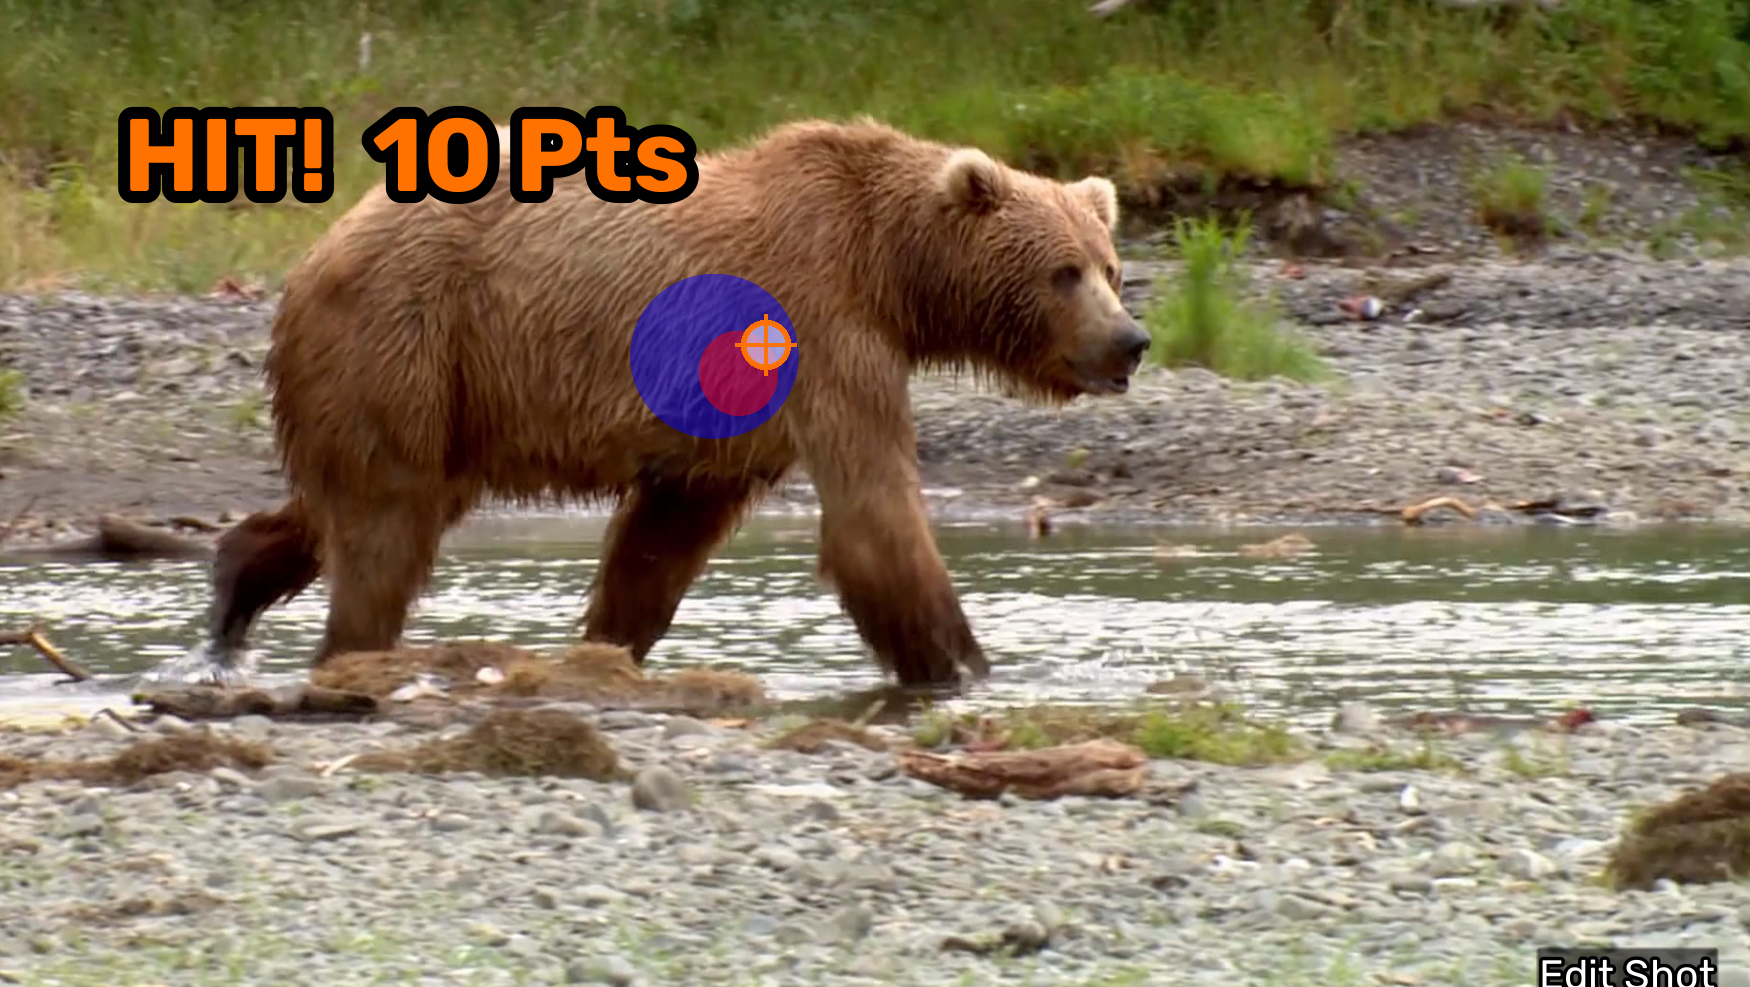 Bear video scoring 10 points after shot